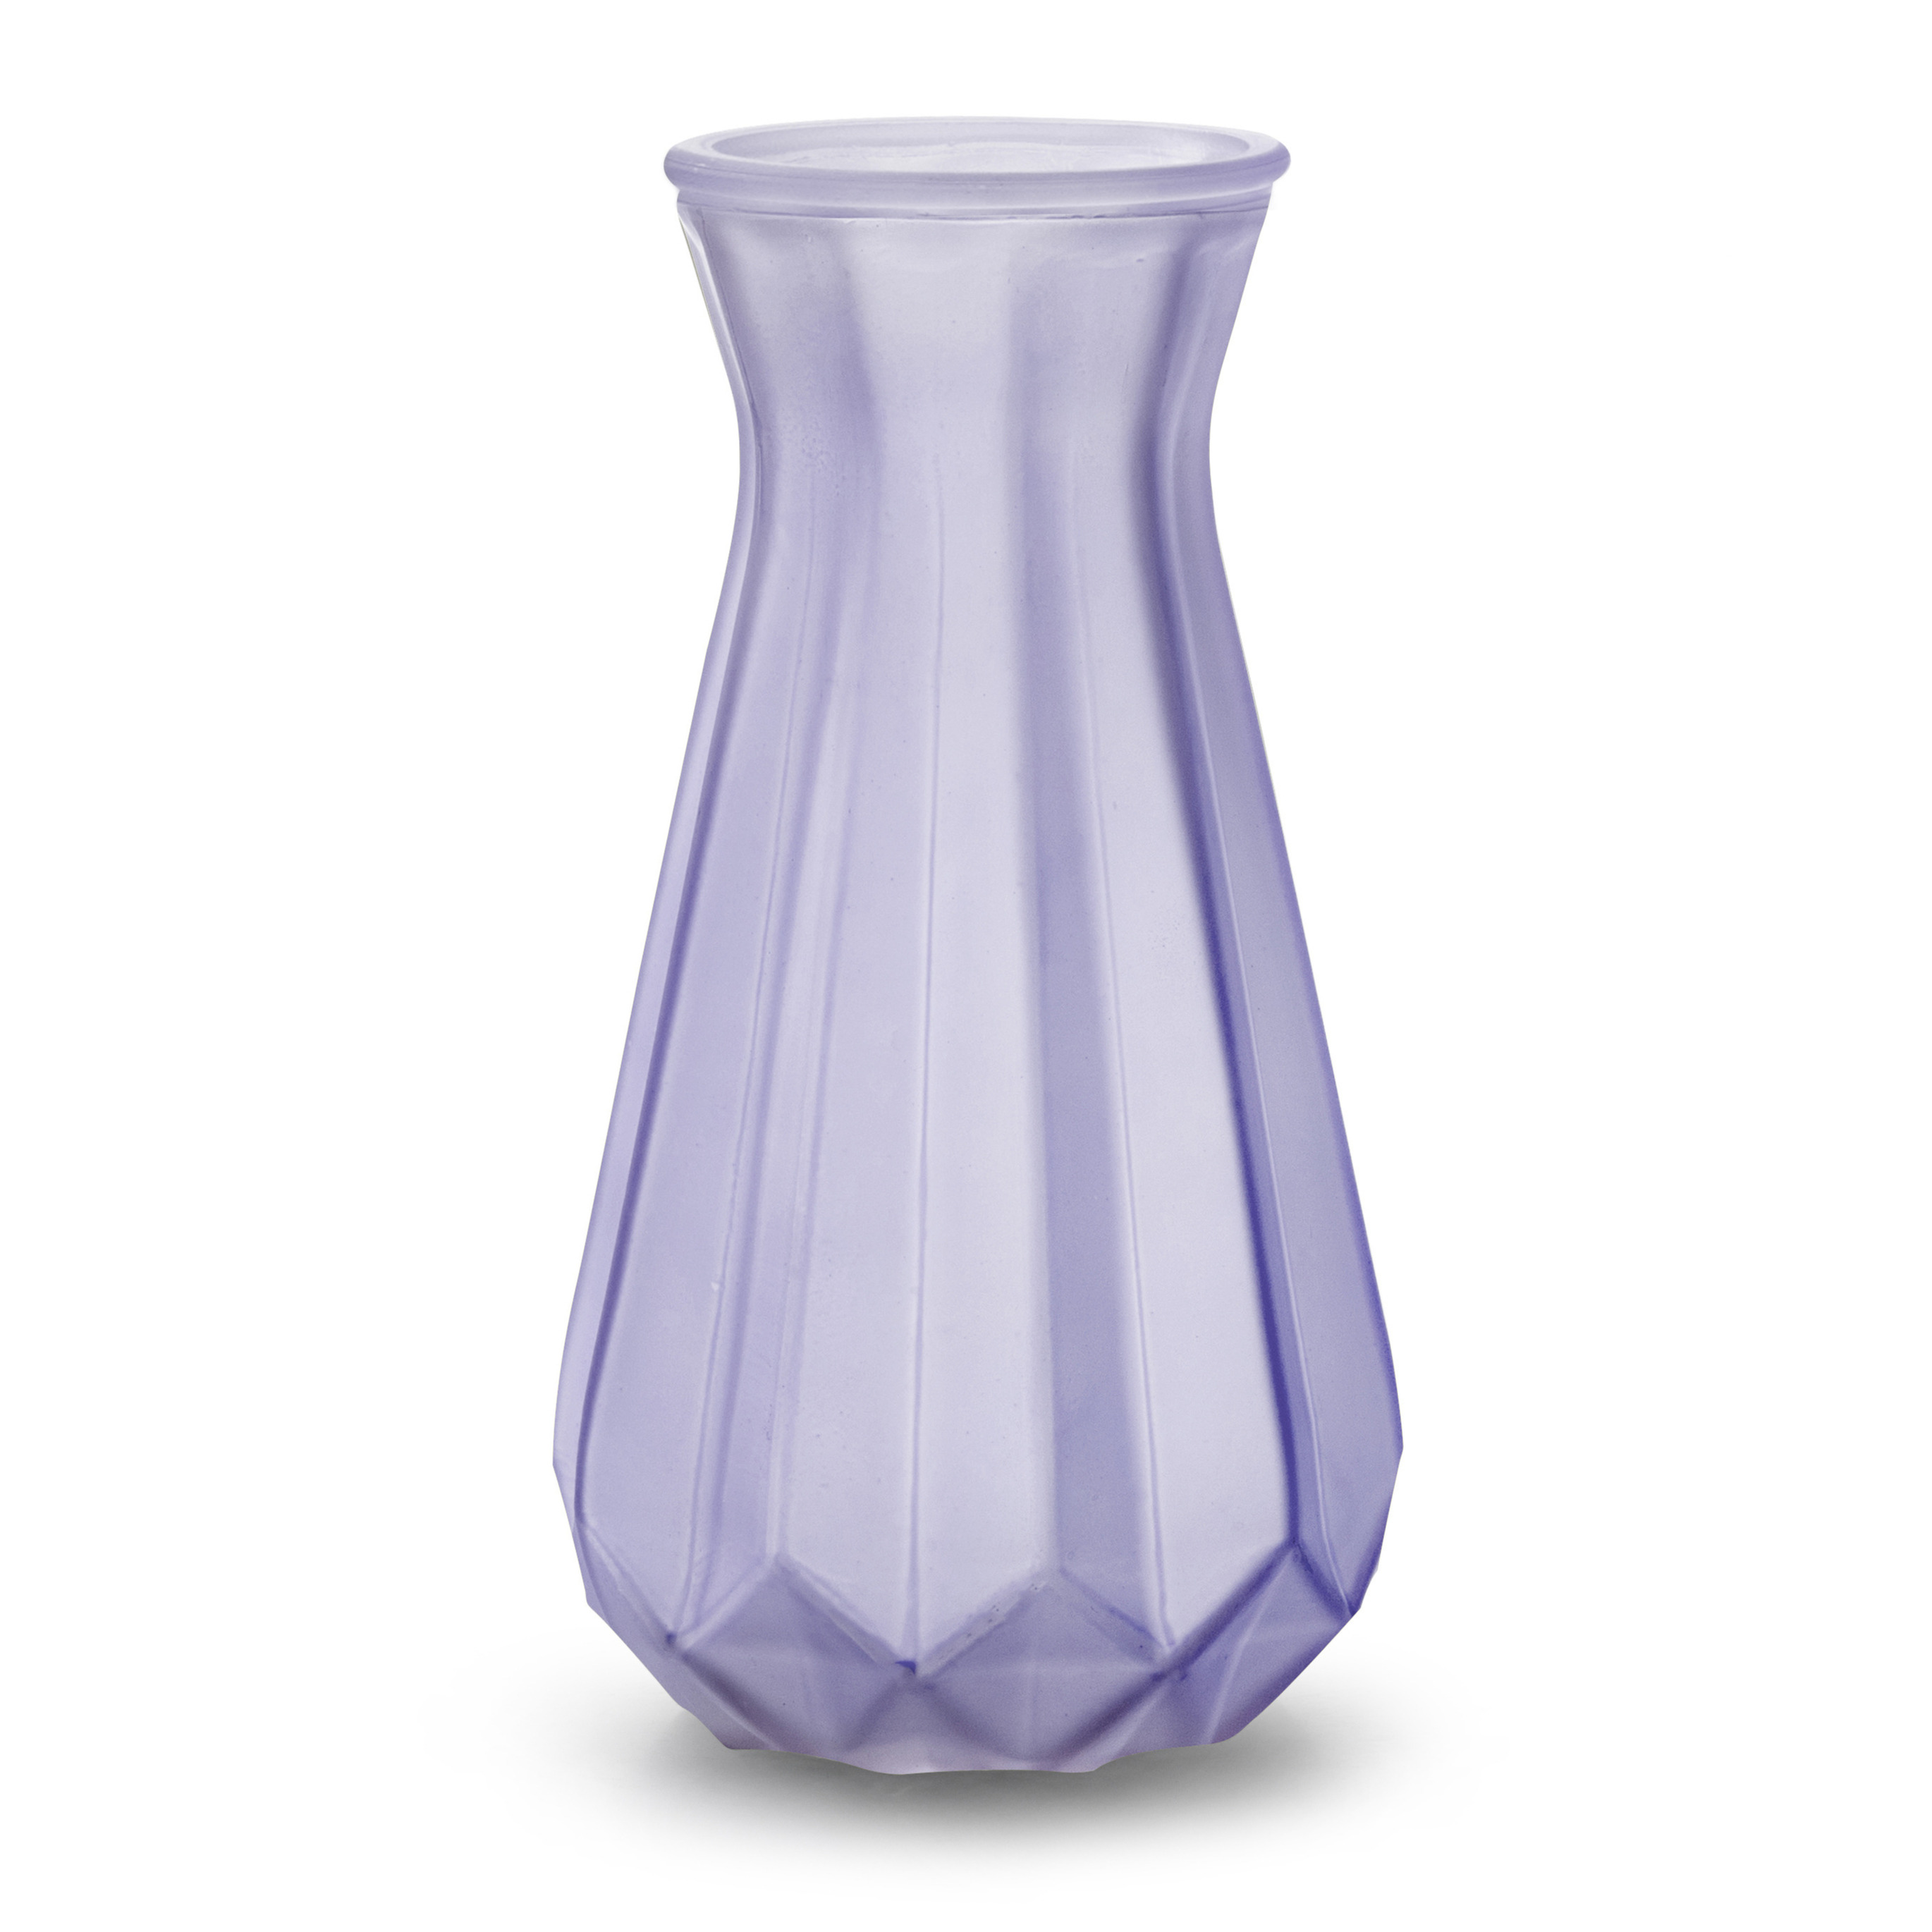 Jodeco Bloemenvaas - lila paars/transparant glas - H18 x D11.5 cm -